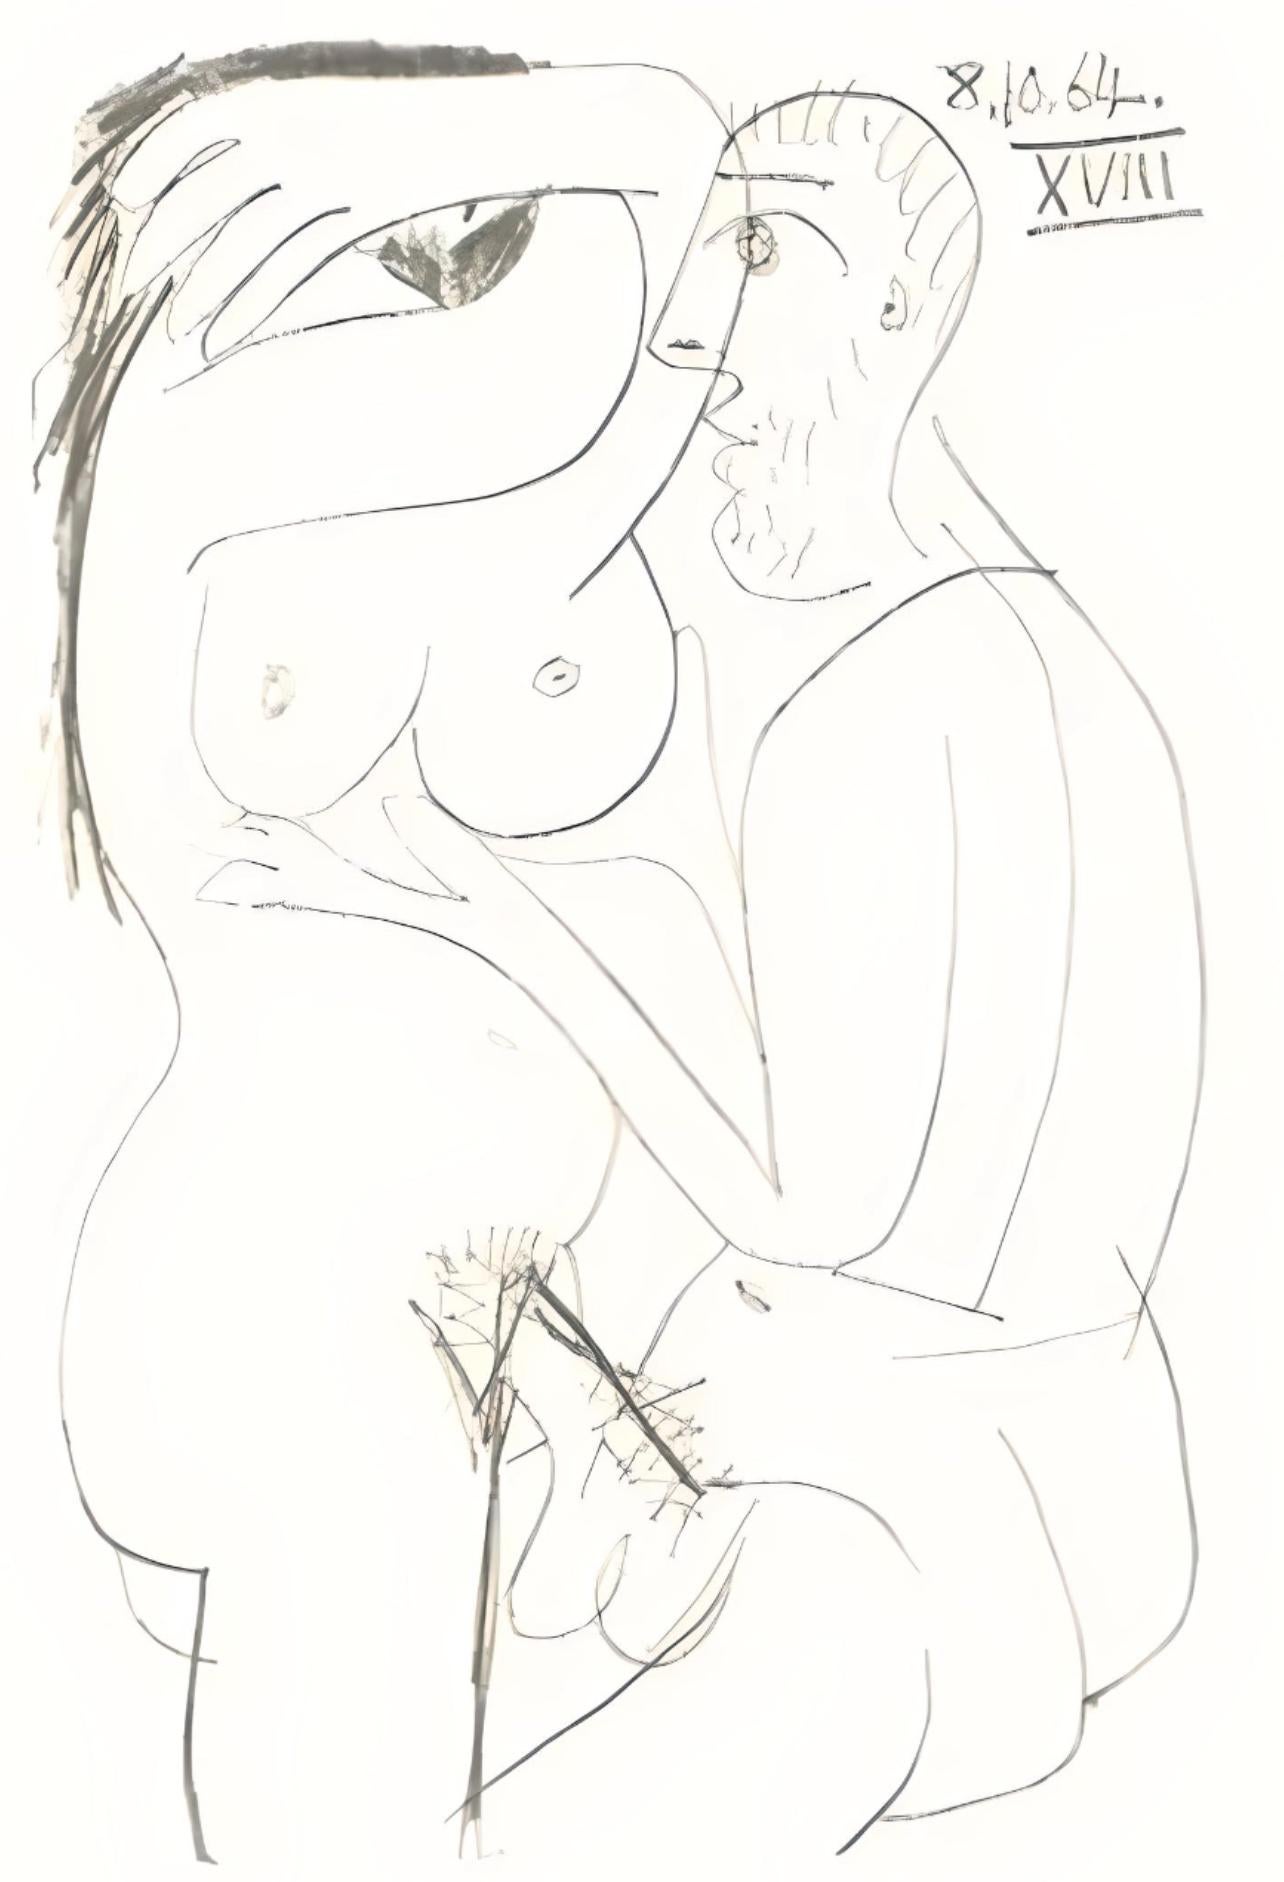 Picasso, Le Goût du Bonheur 67 (Cramer 148; Bloch 2013) (after)